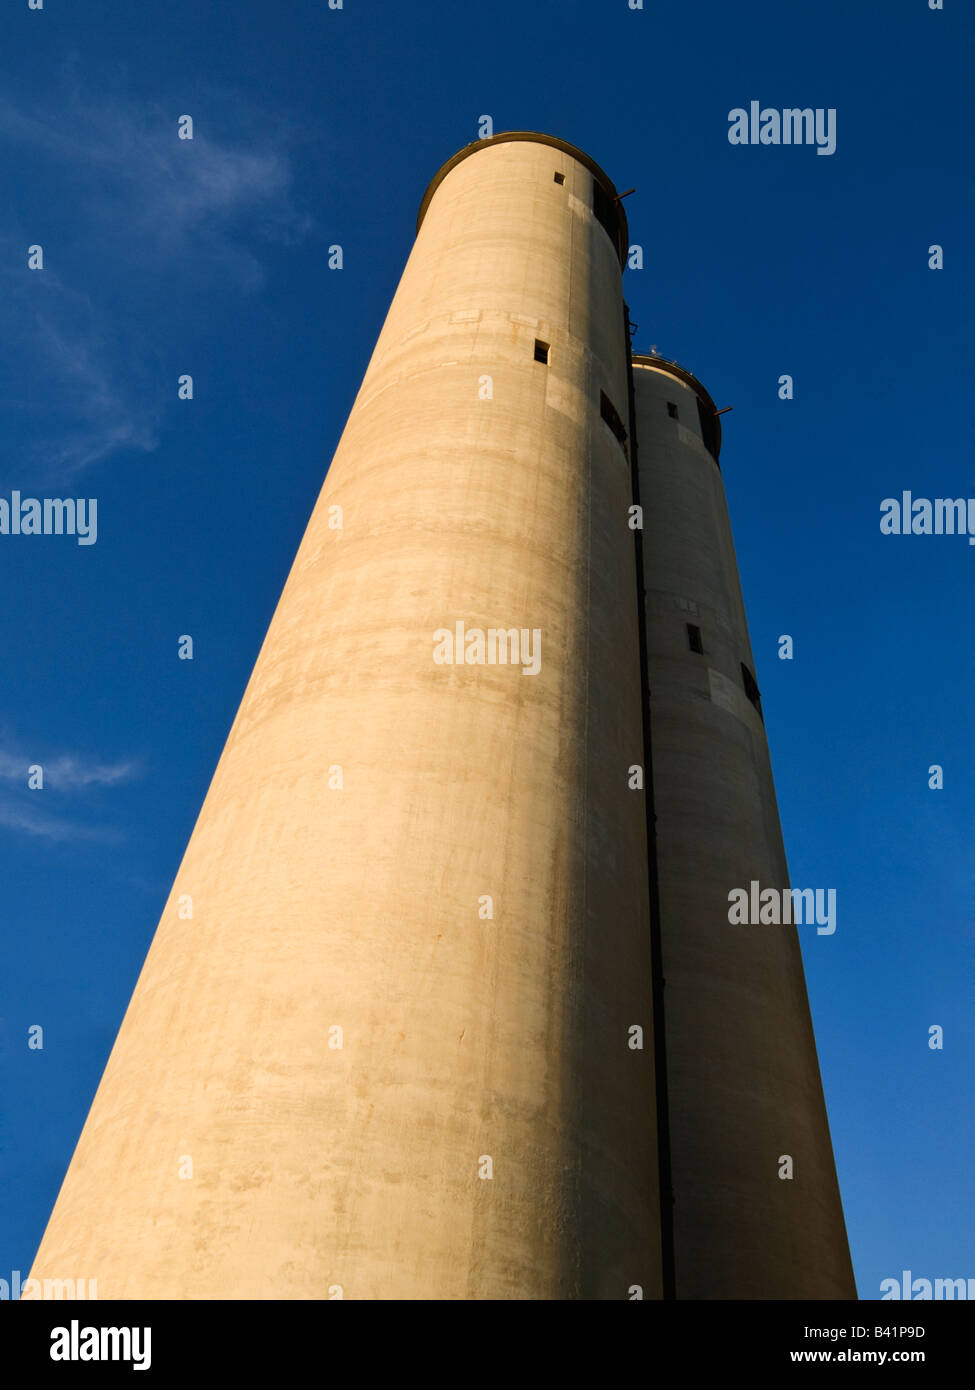 Zwei industriellen Türme Standign gemeinsam gegen klaren blauen Himmel. Stockfoto